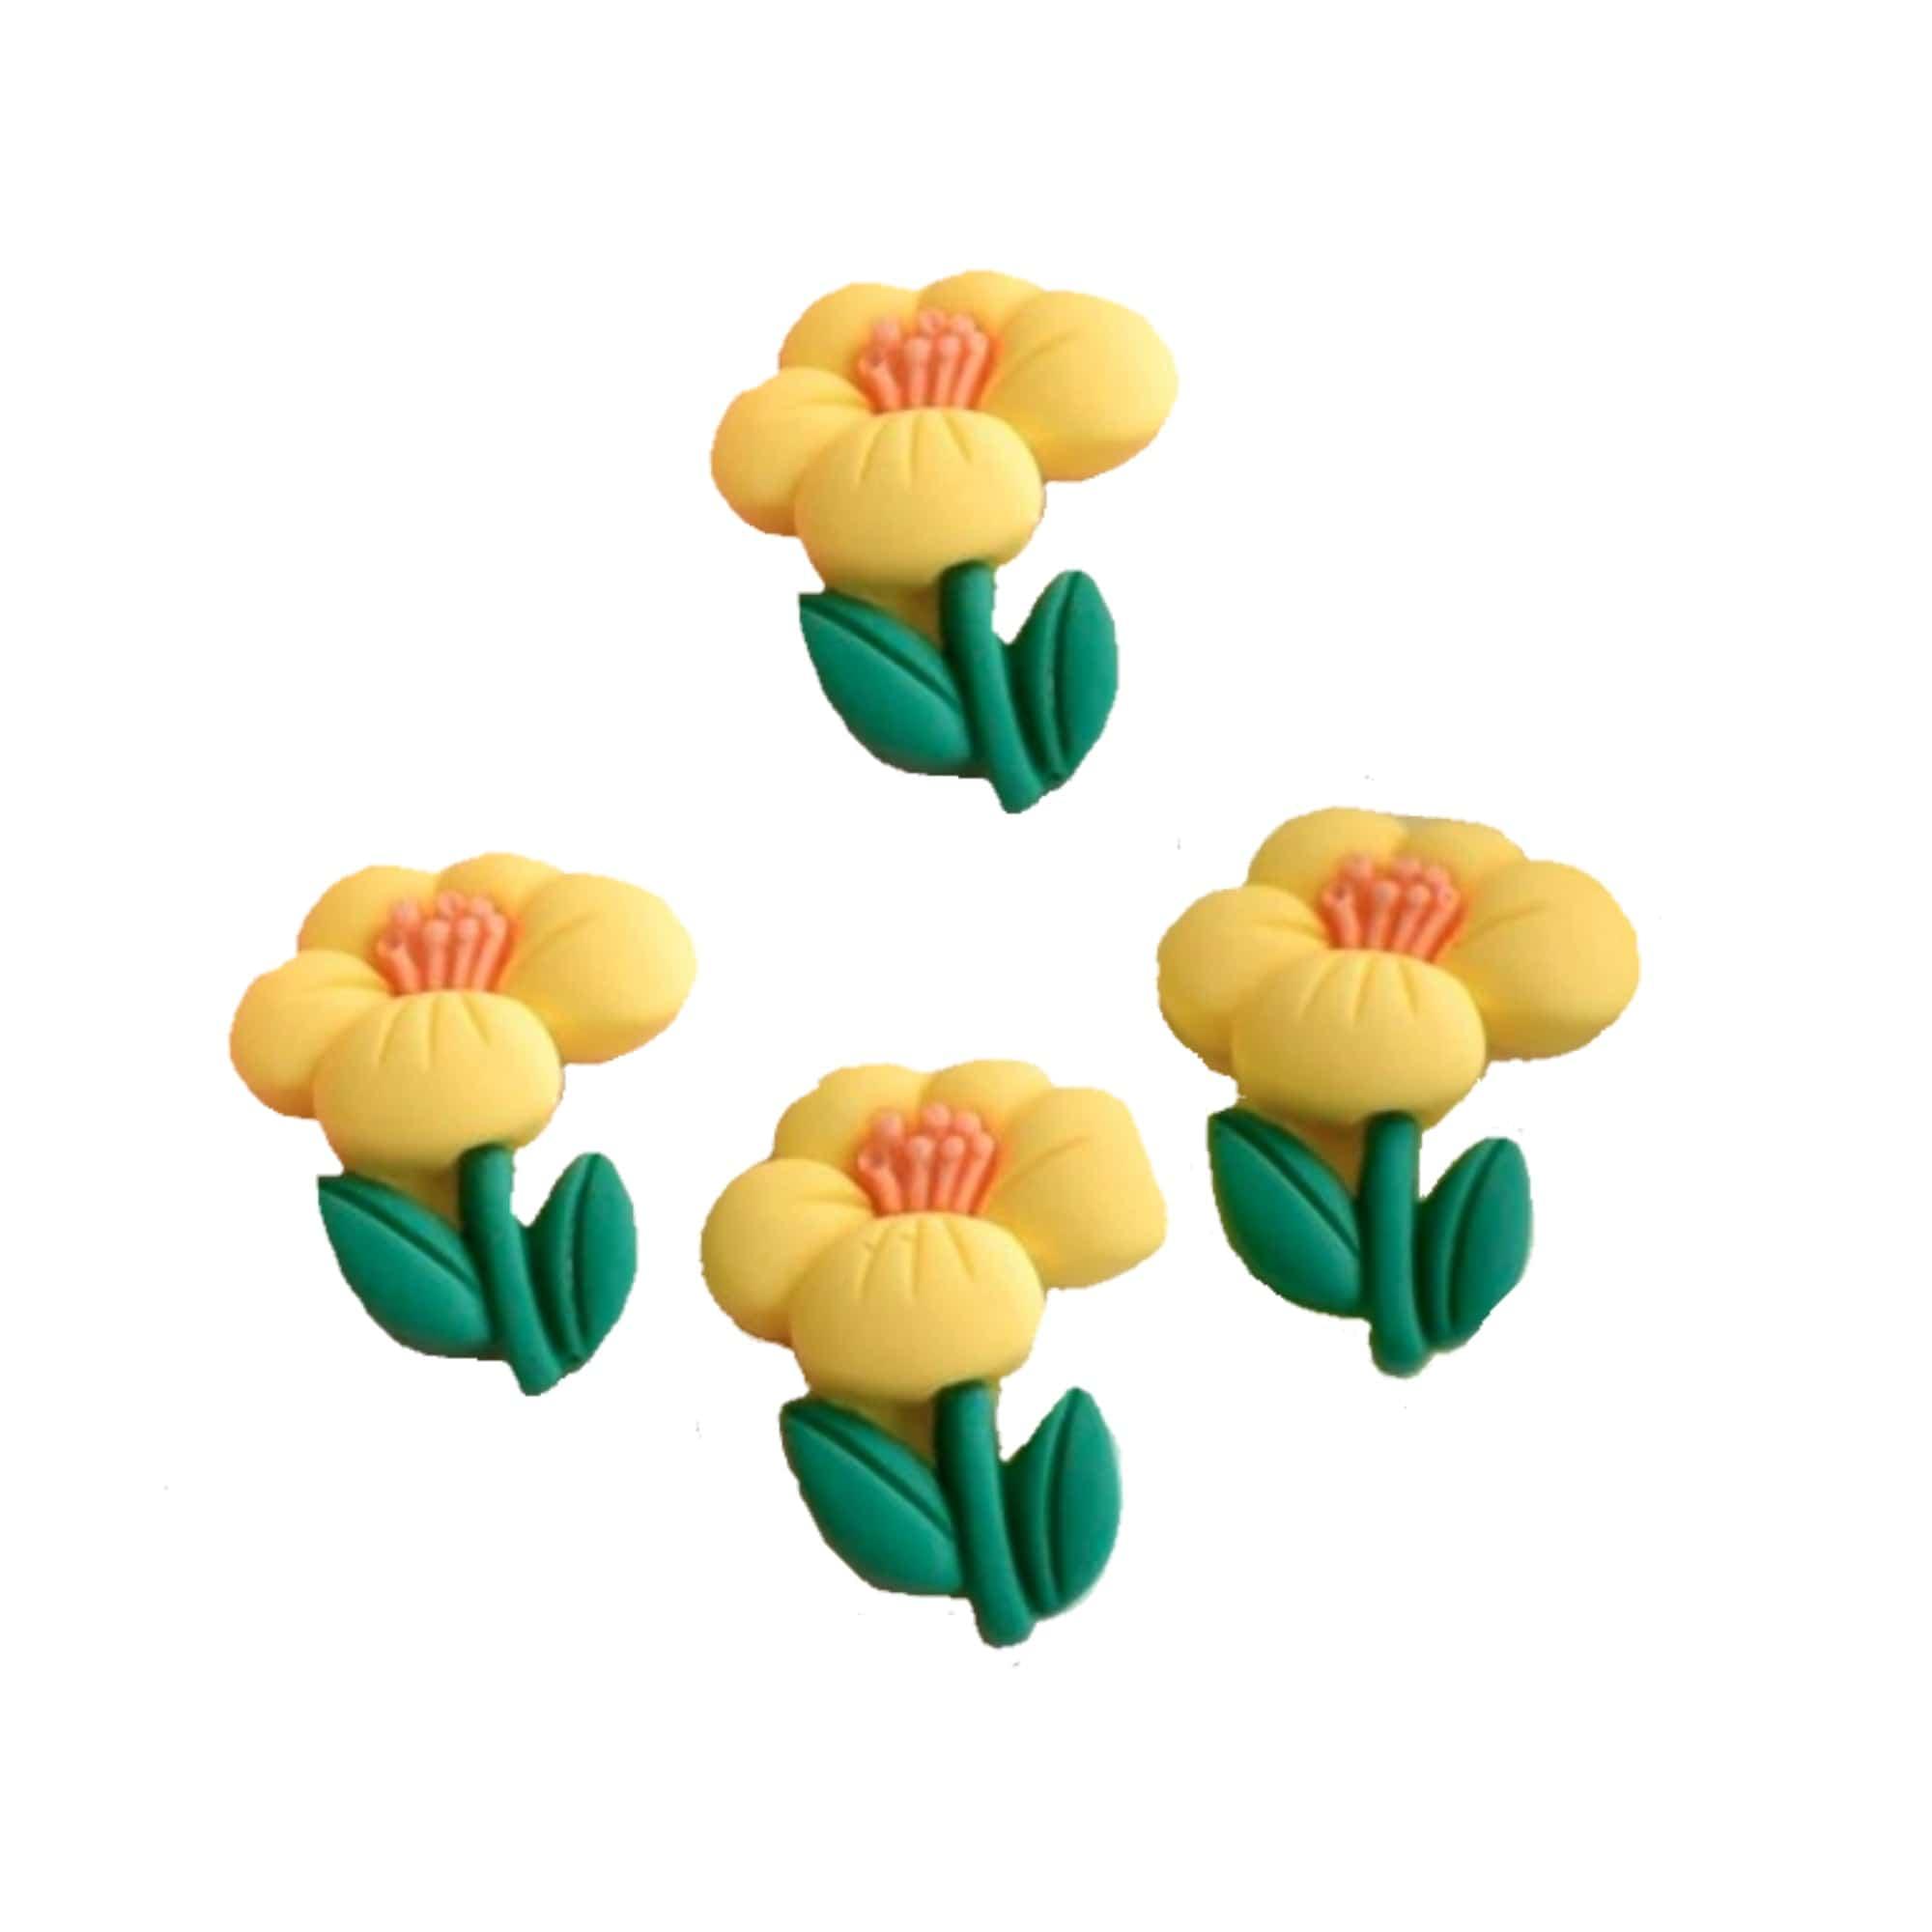 Flower Fun Collection 1" Yellow Daisy Flatback Scrapbook Buttons by SSC Designs - Pkg. of 4 - Scrapbook Supply Companies